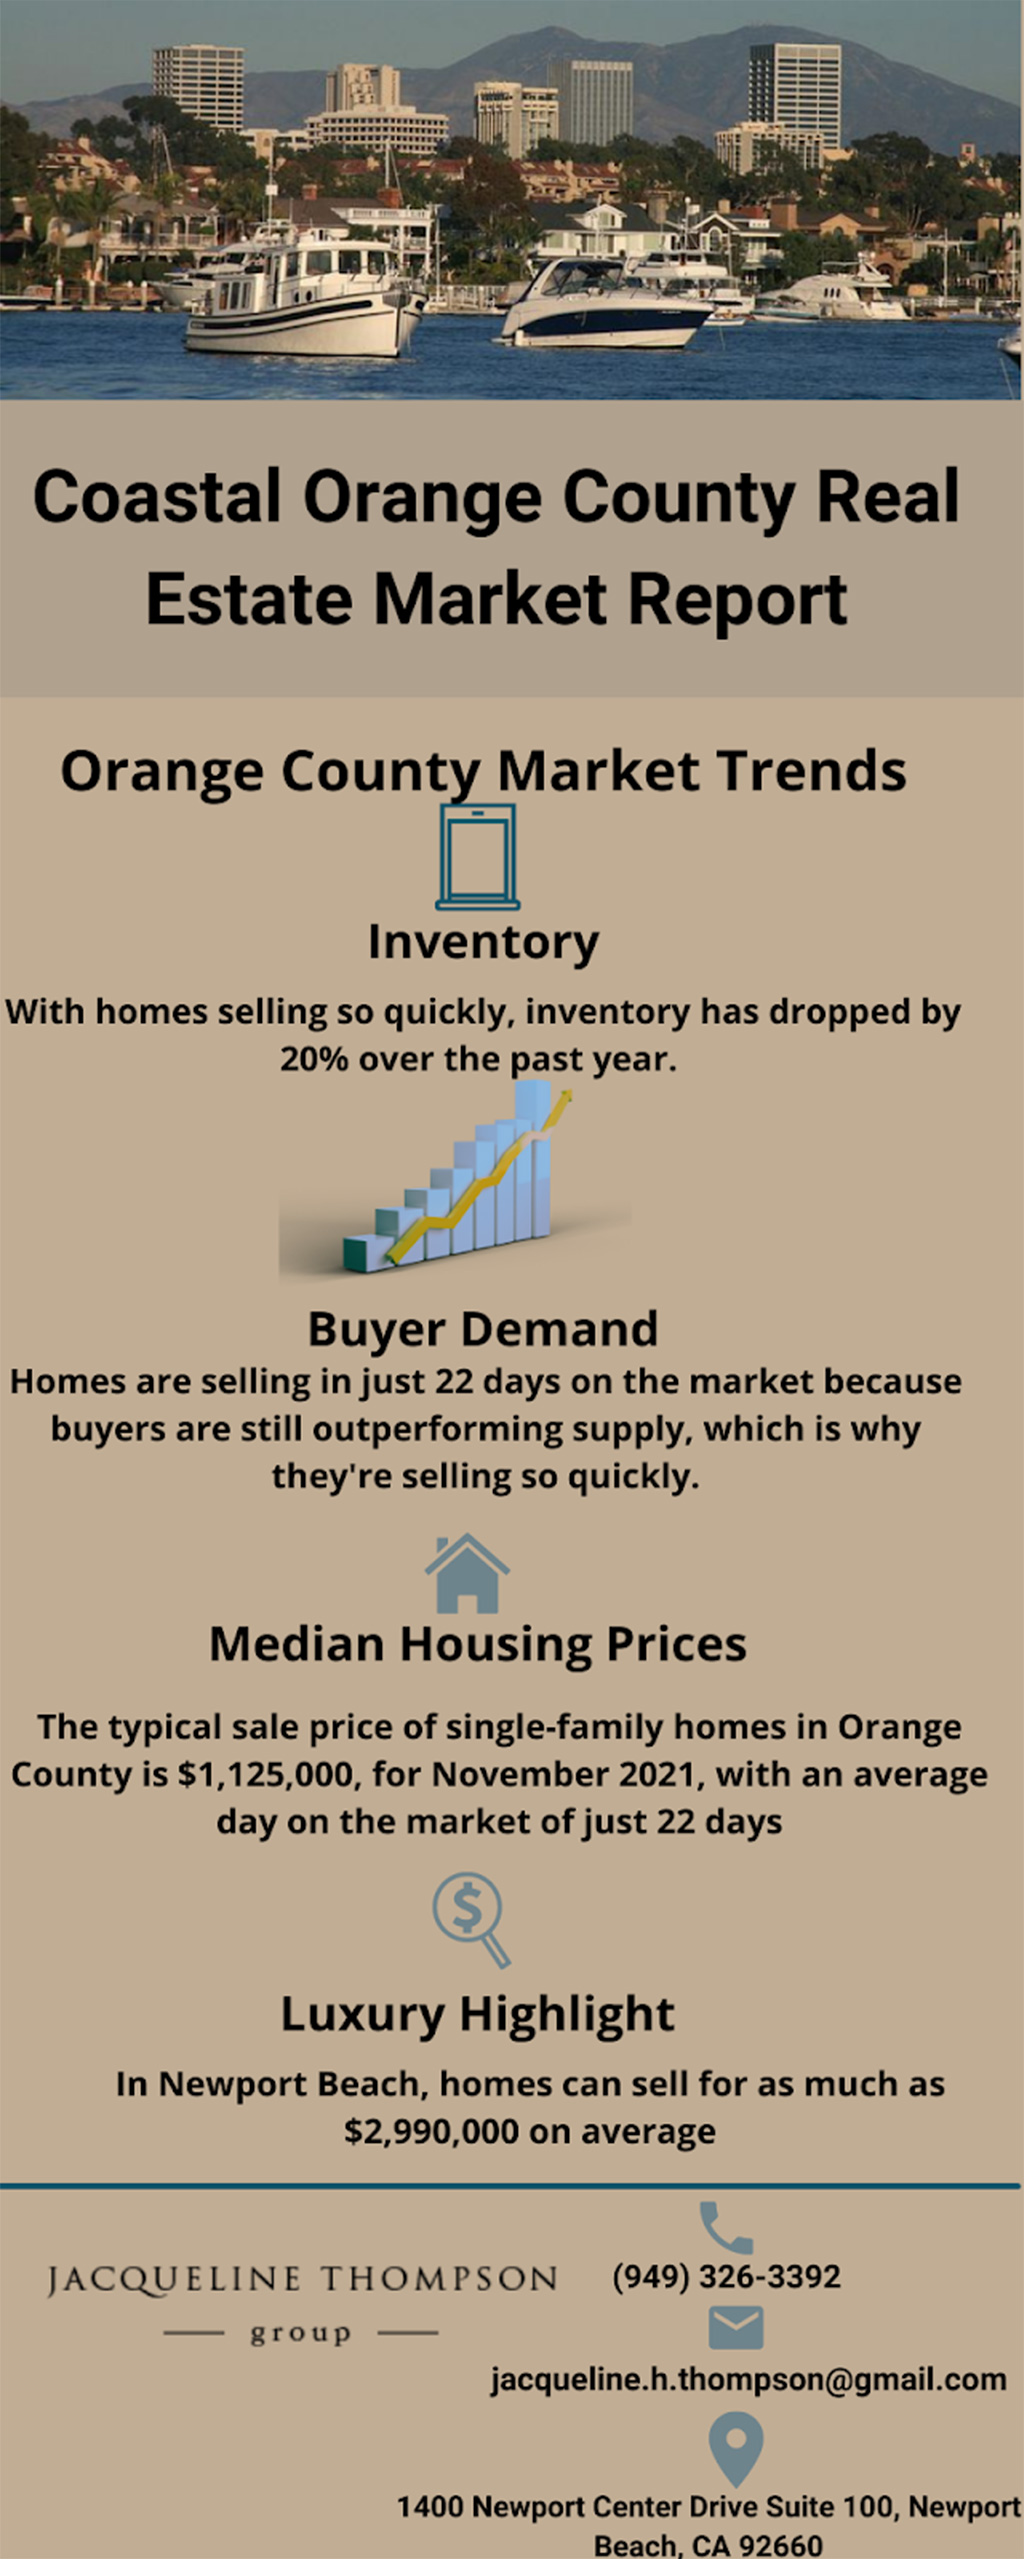 Coastal Orange County Real Estate Market Report infographic